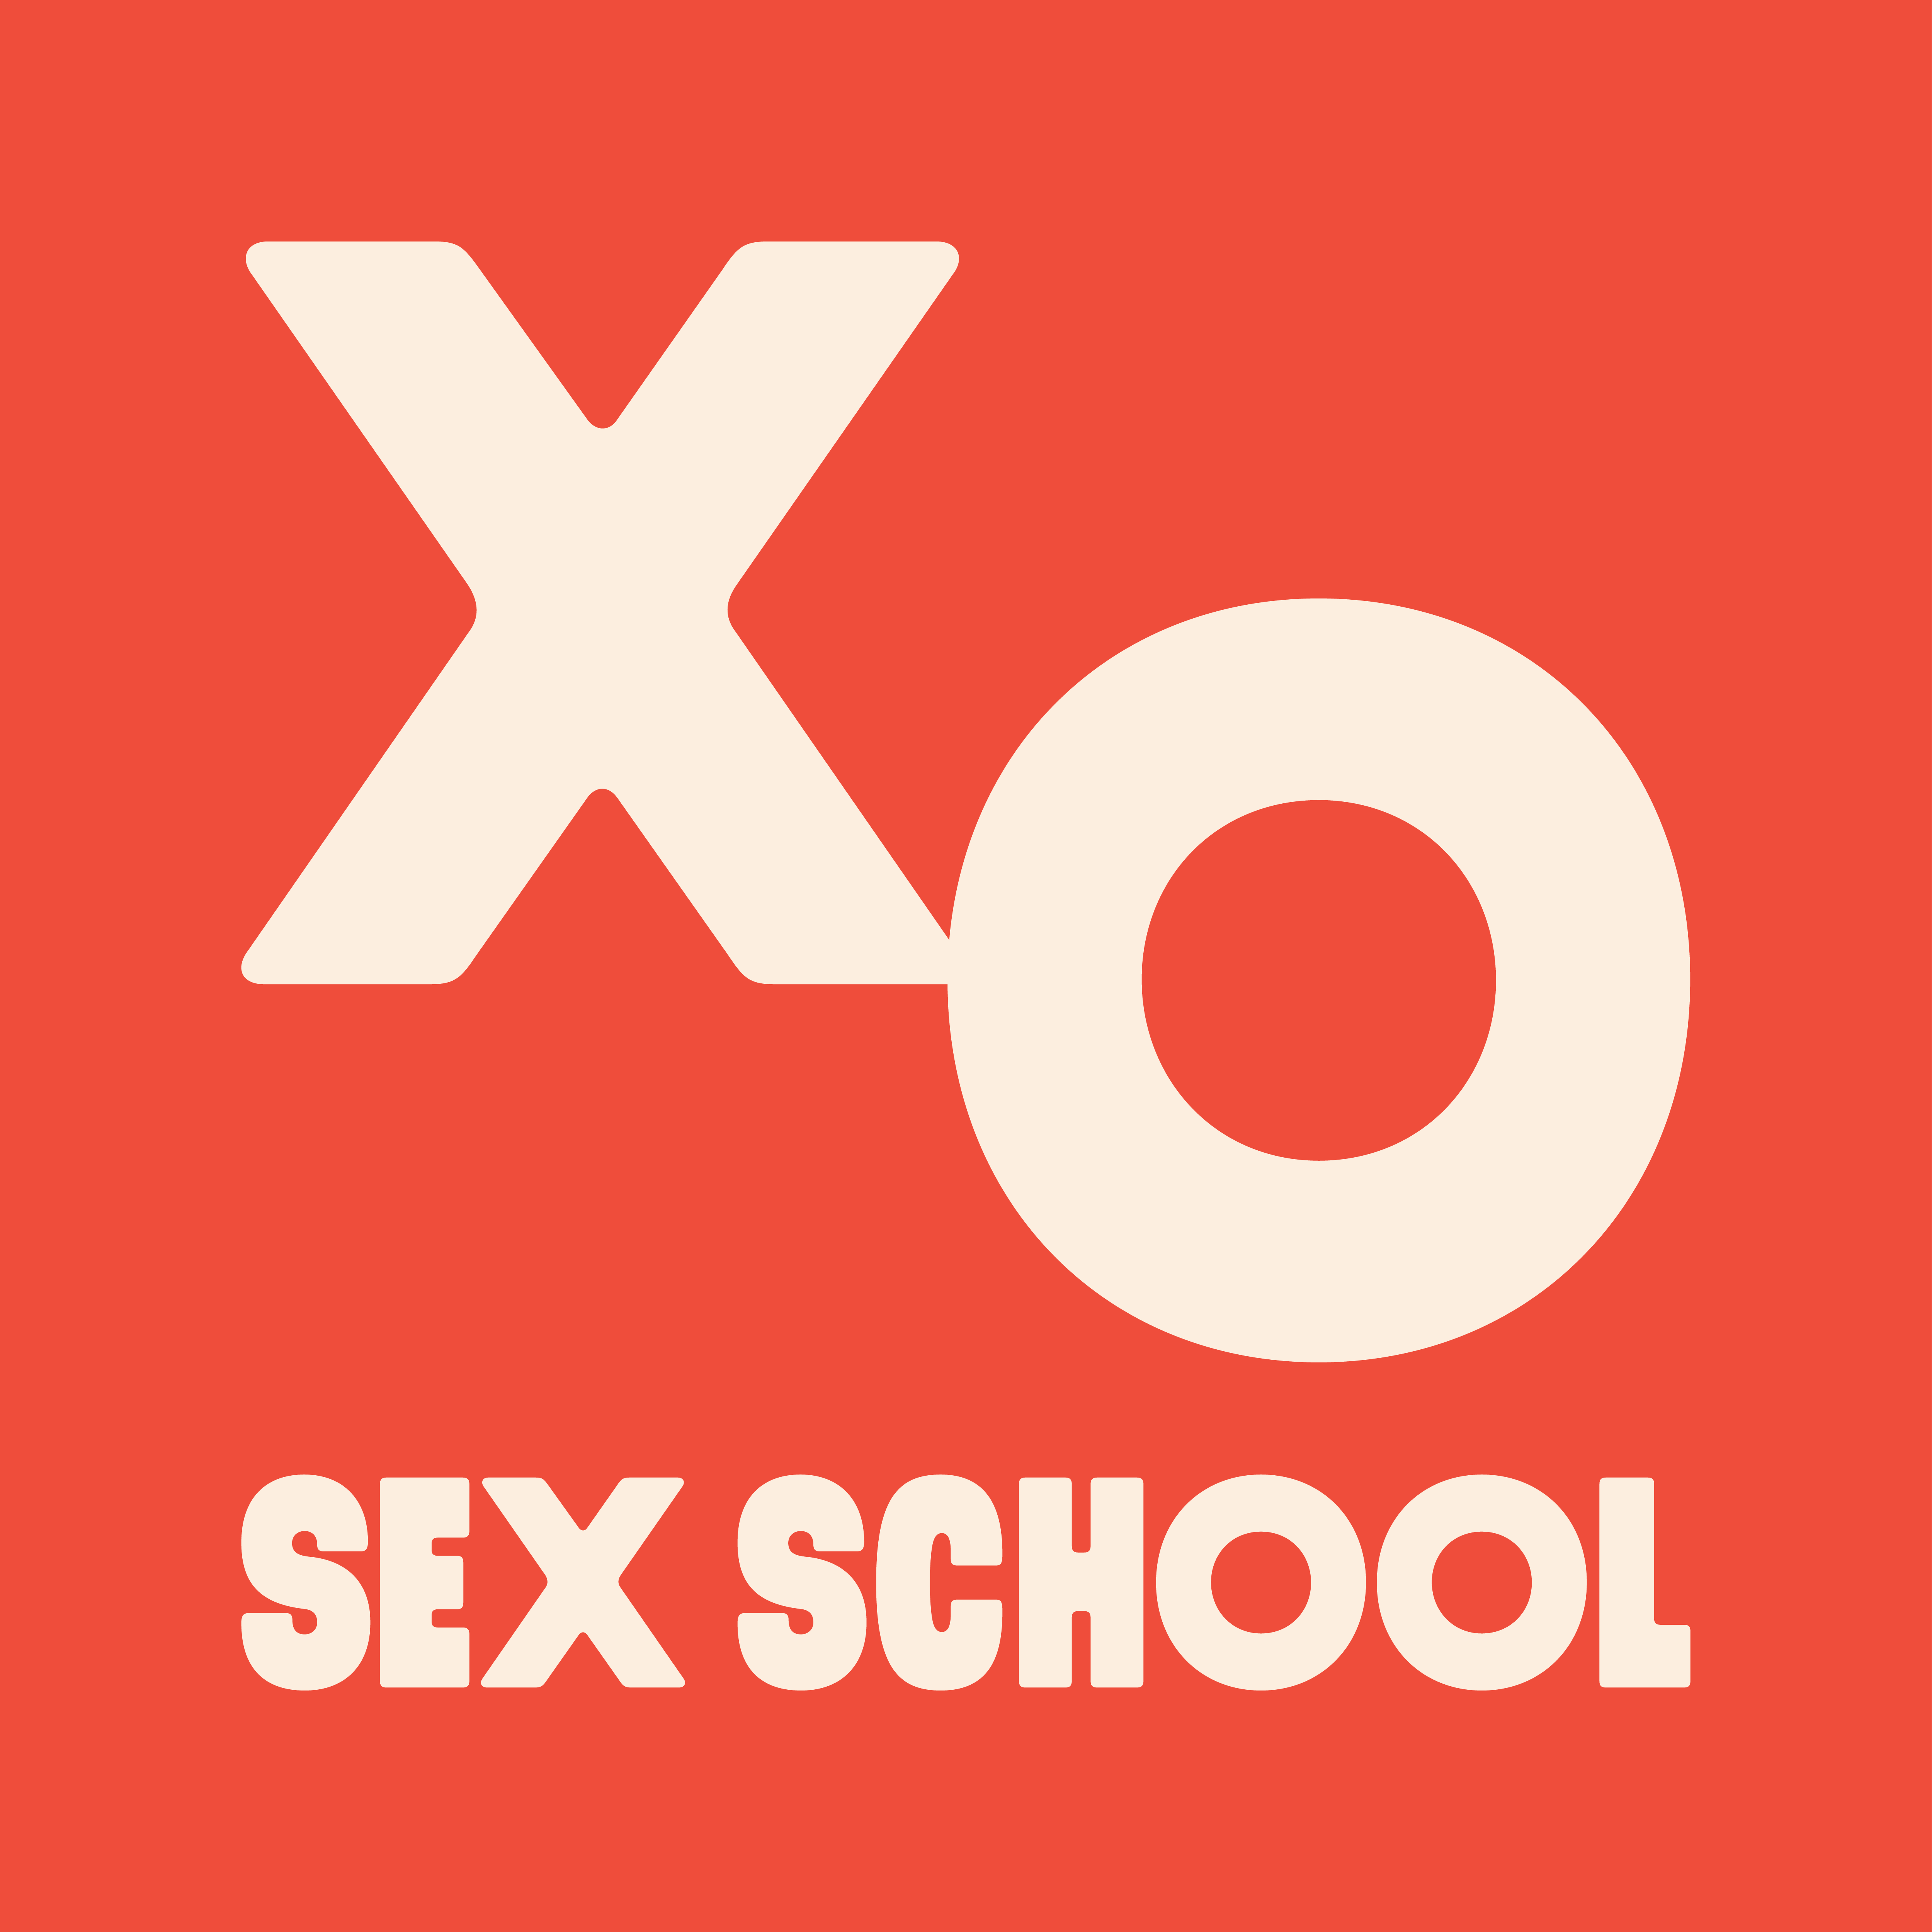 Hindi School Ja Sexy Video - Sex School Hub - PinkLabel.TV